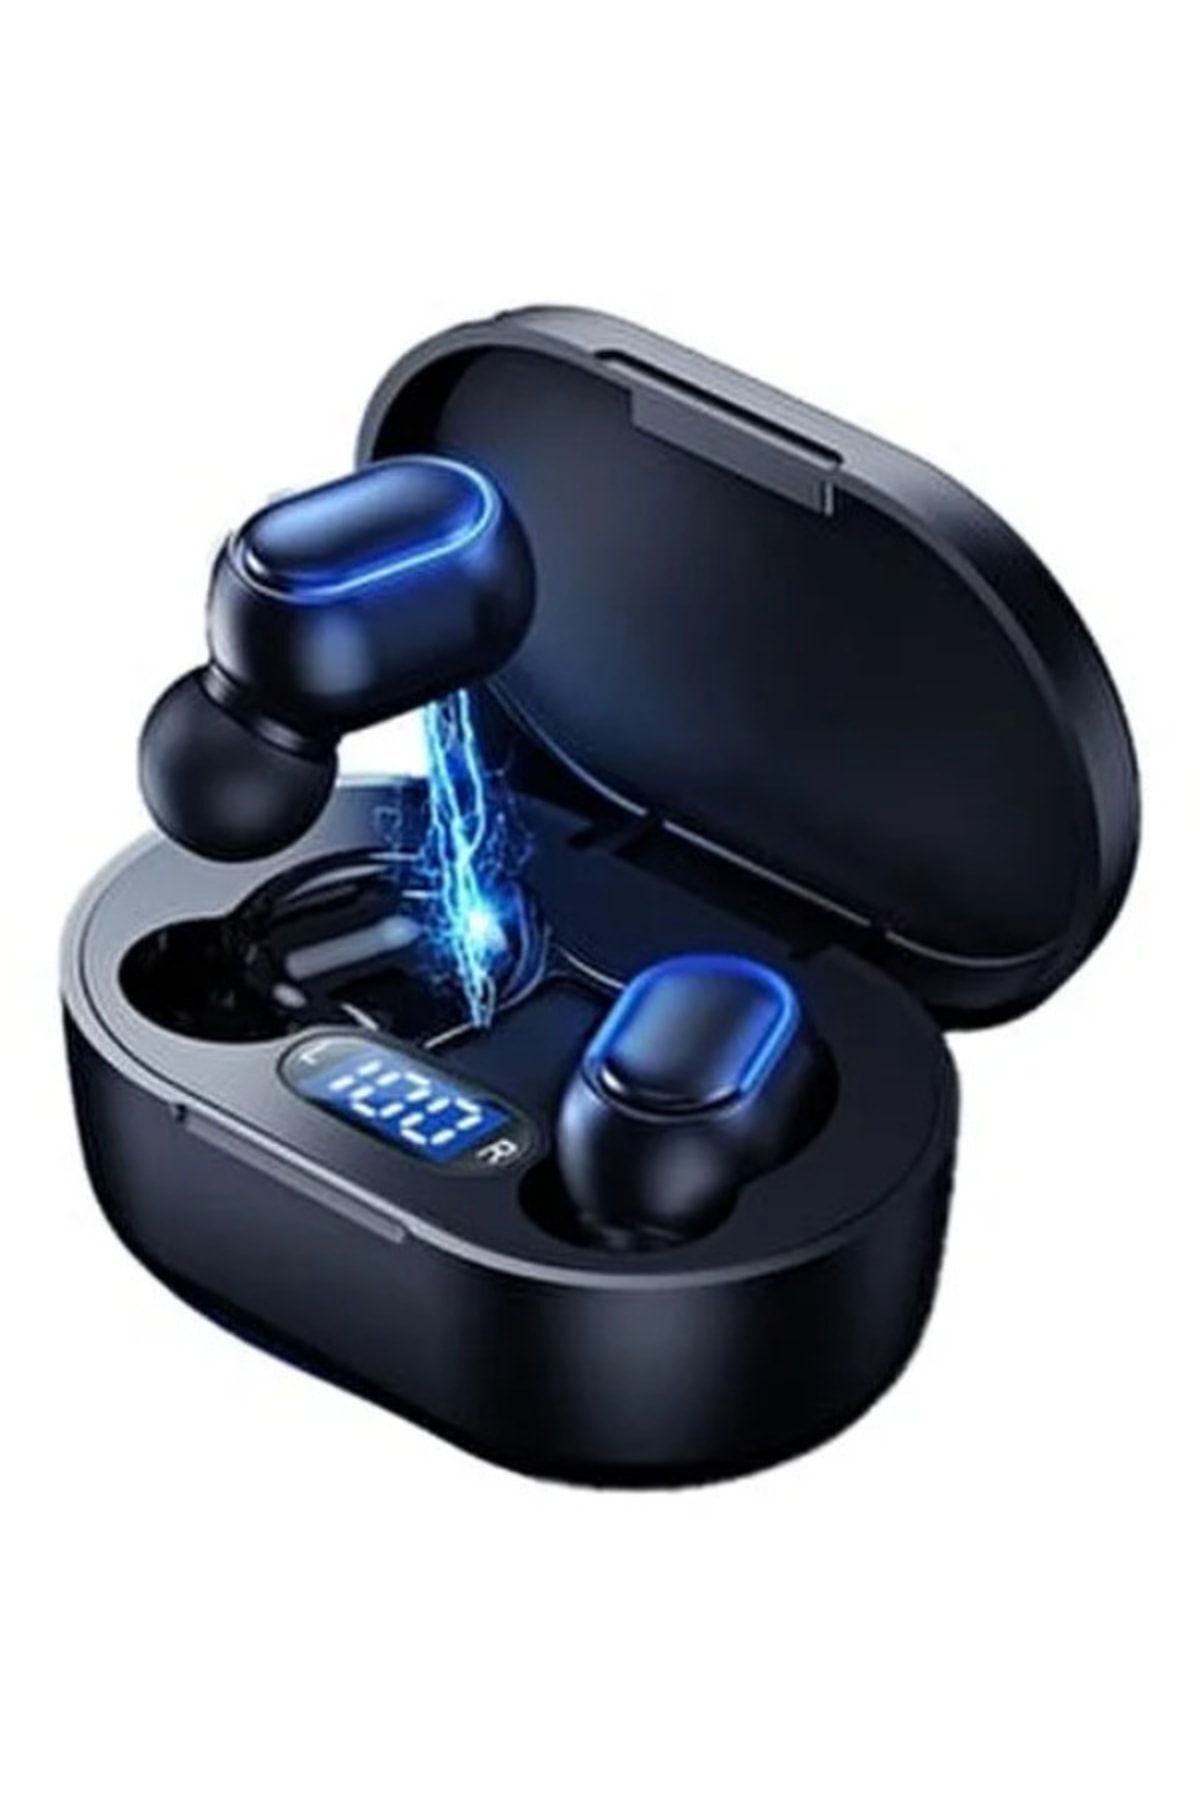 Teknoloji Gelsin E7s Dots Bluetooth Kulaklık Çift Mikrofonlu Extra Bass Kulak Içi Kablosuz Kulaklık V5.0 Hd Ses